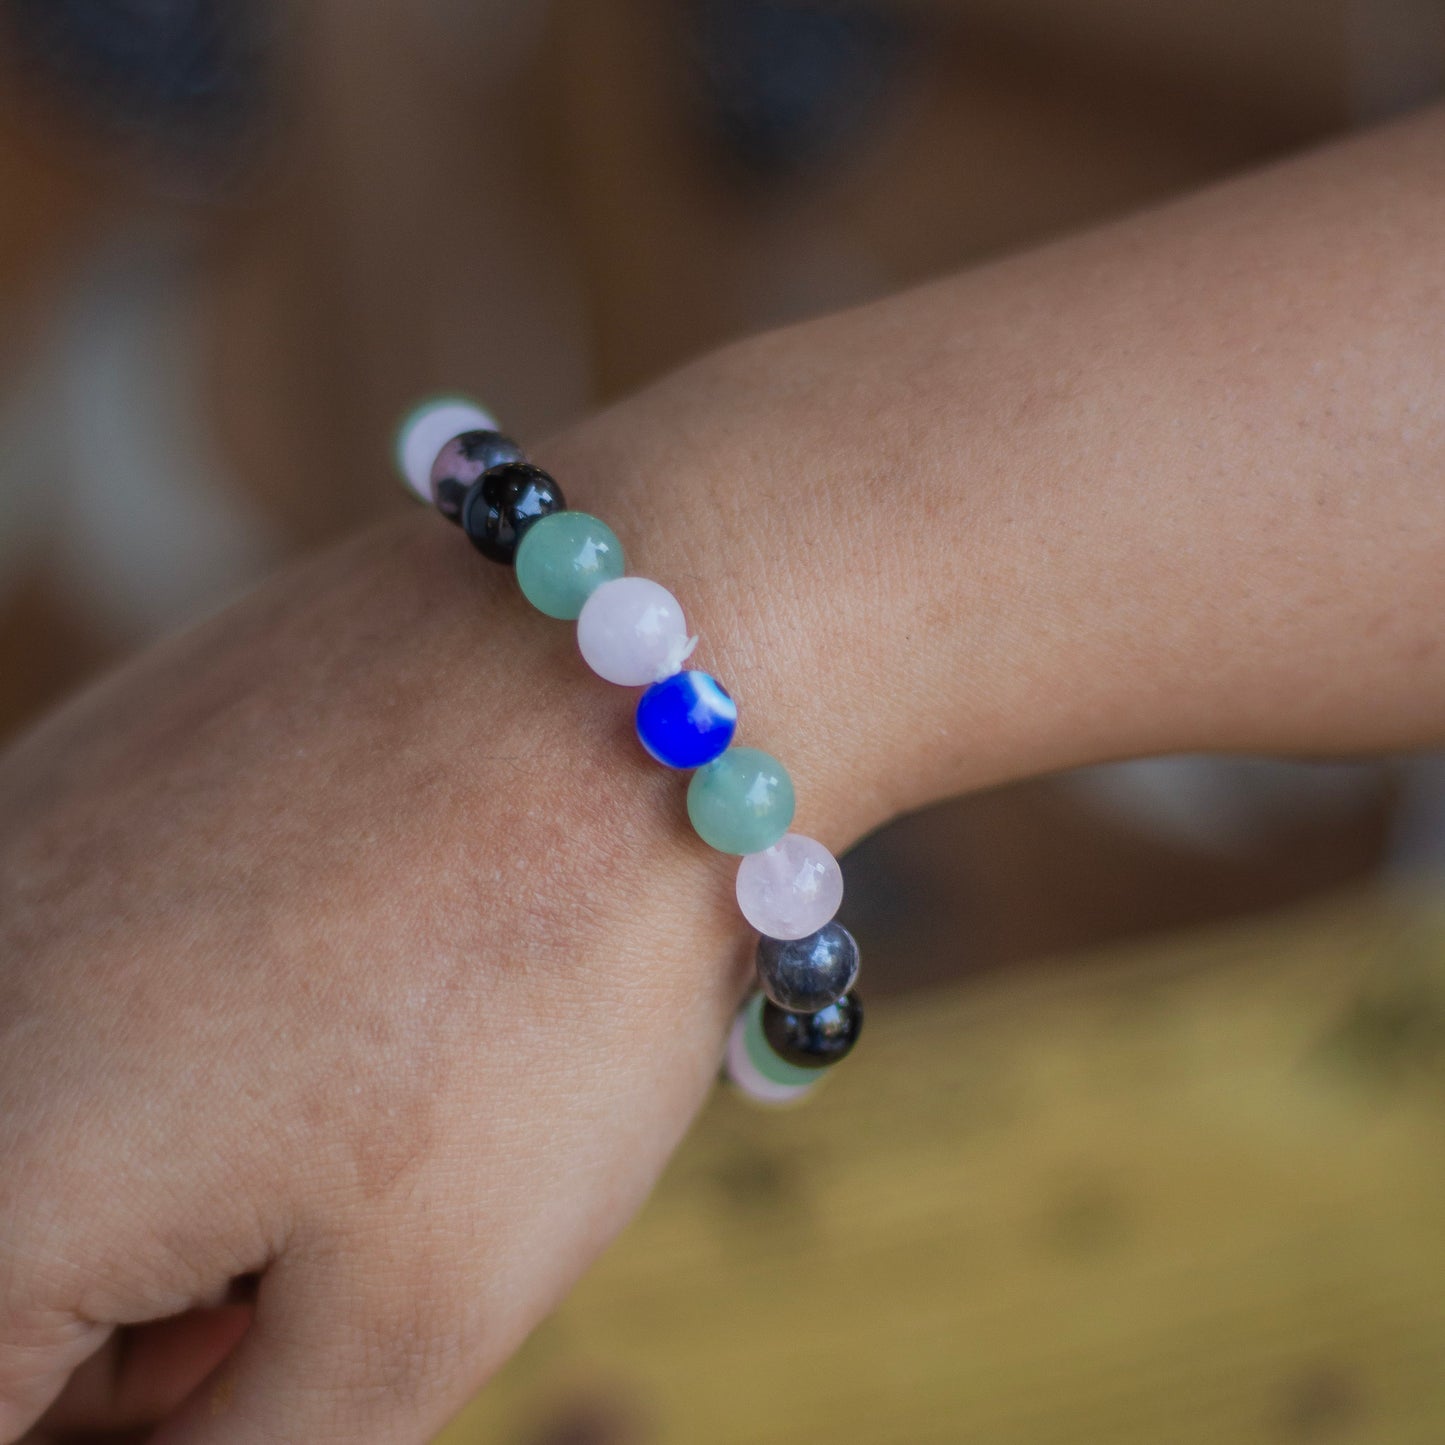 Healing & Protection Bracelet | Works on Heart Chakra, Promotes Love & Self Love